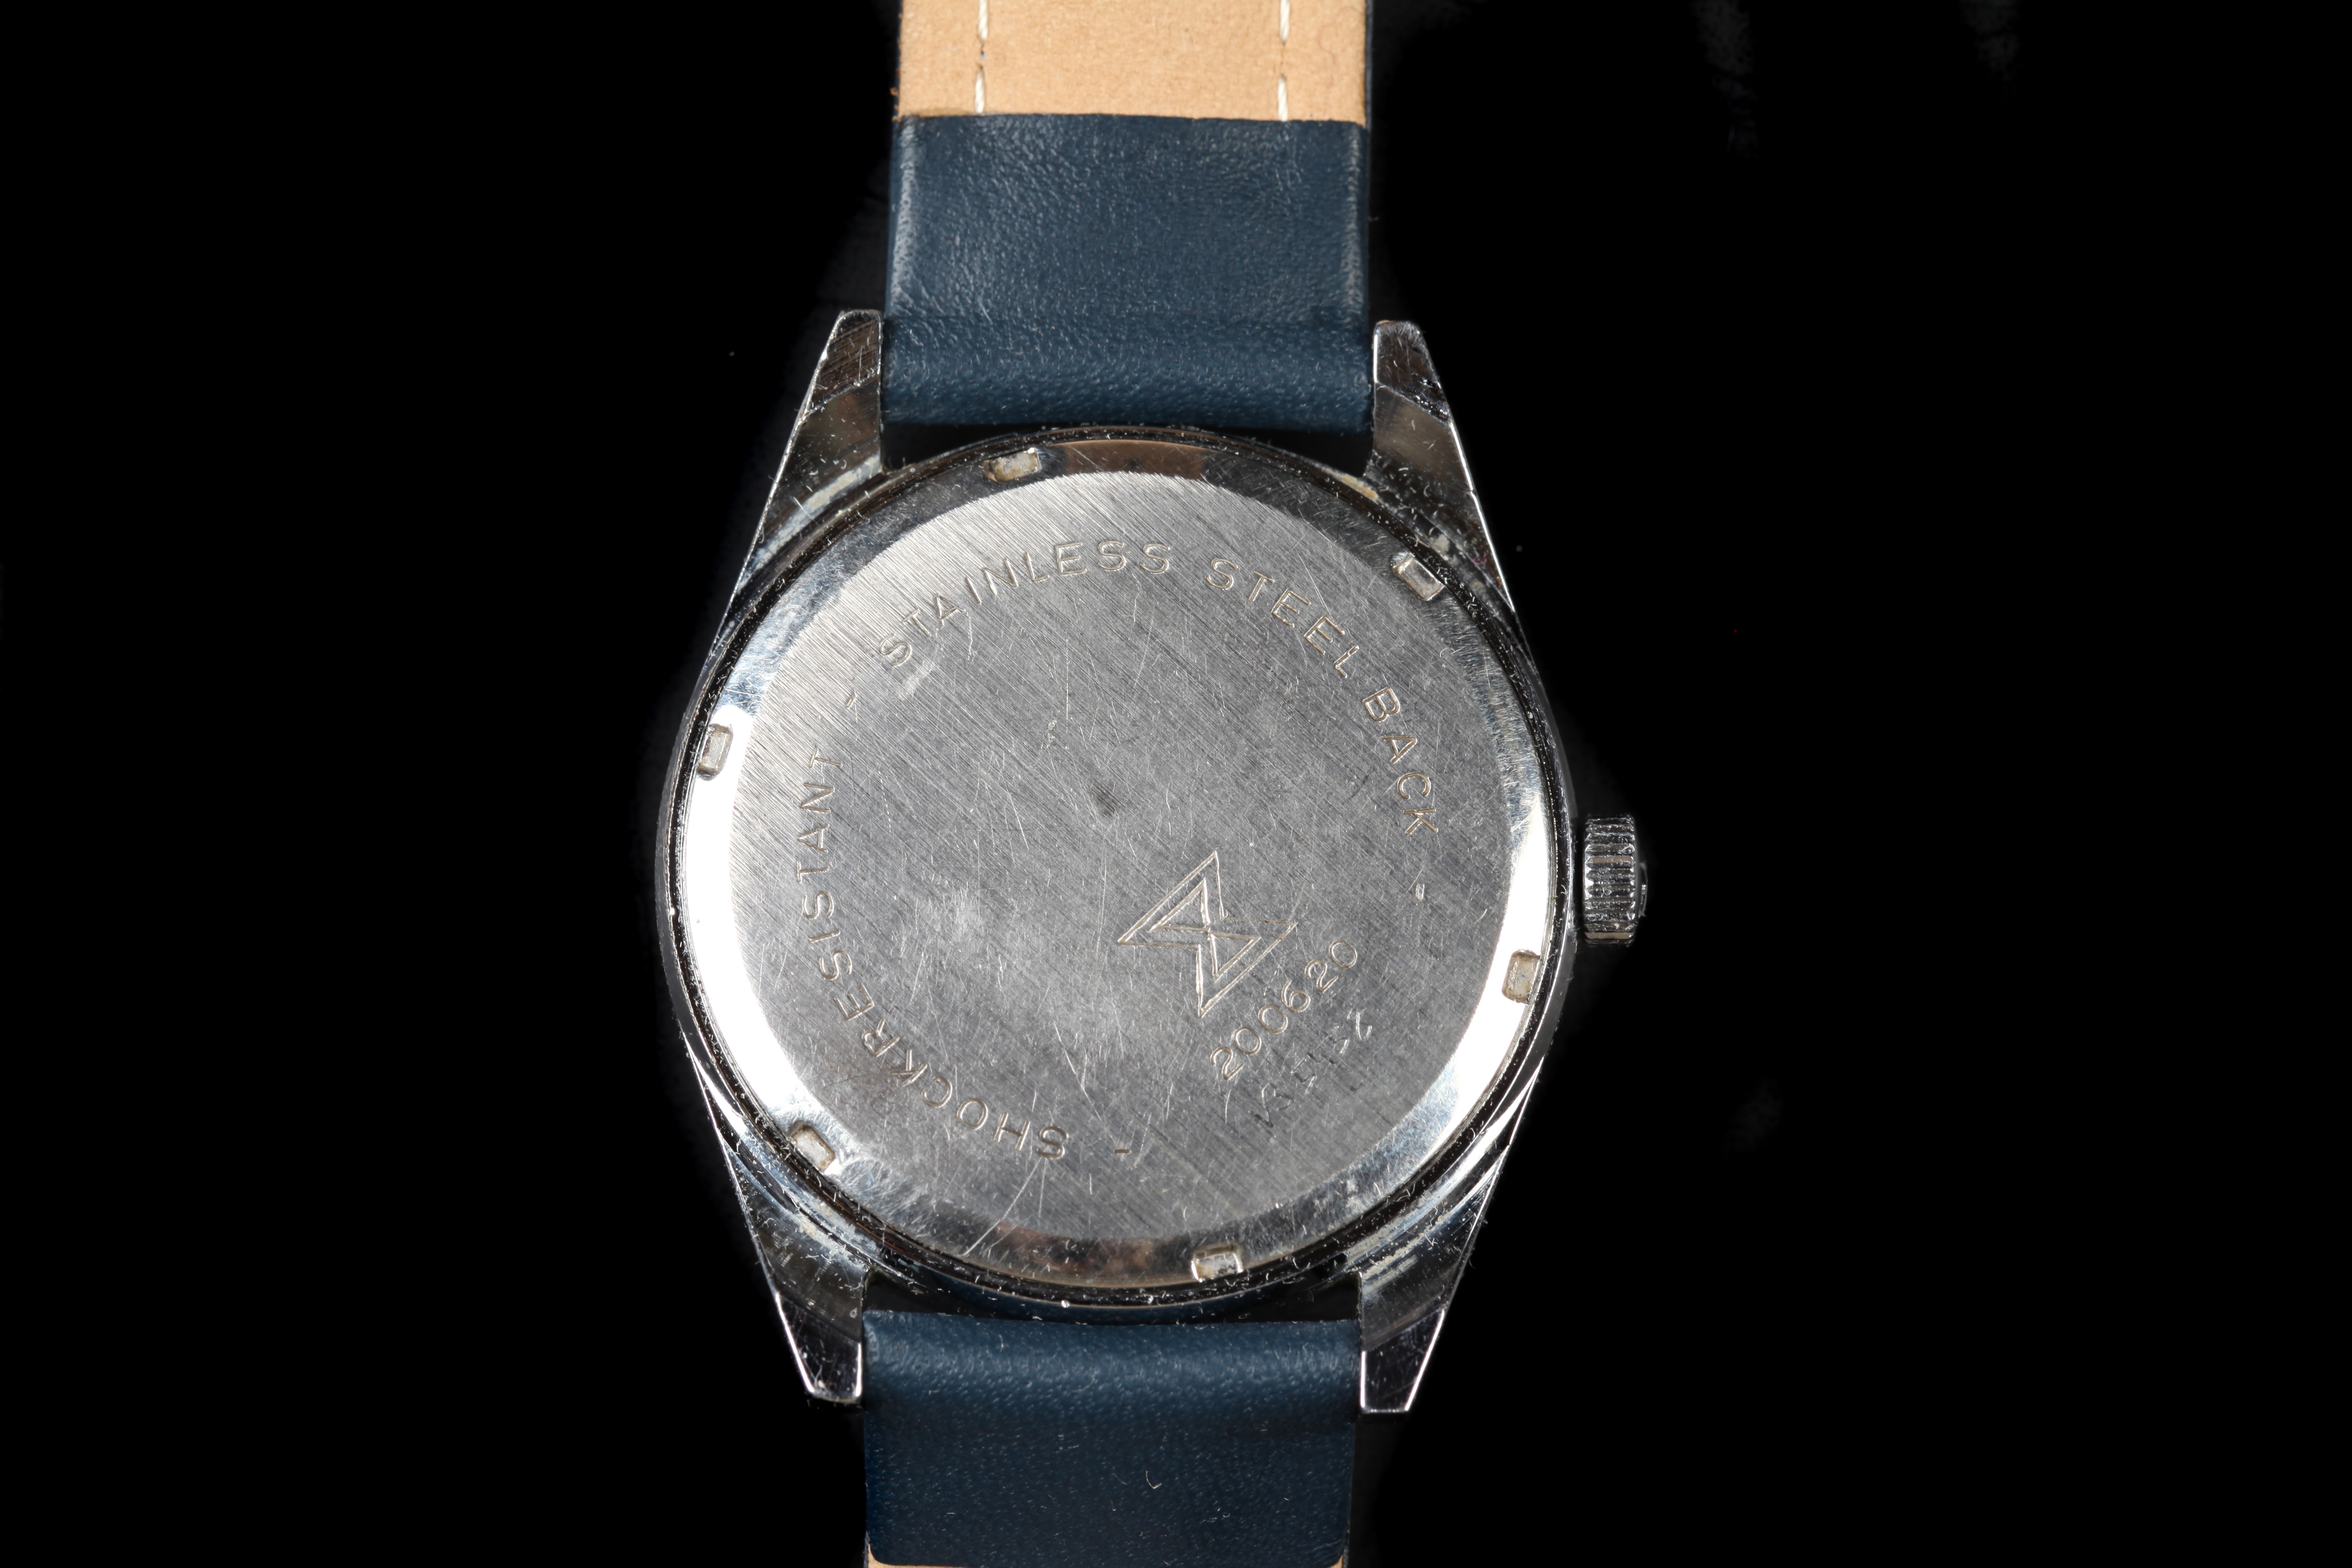 An Edox gentleman's stainless steel wristwatch, c.1970, manual jewel lever movement, metallic blue - Image 2 of 2